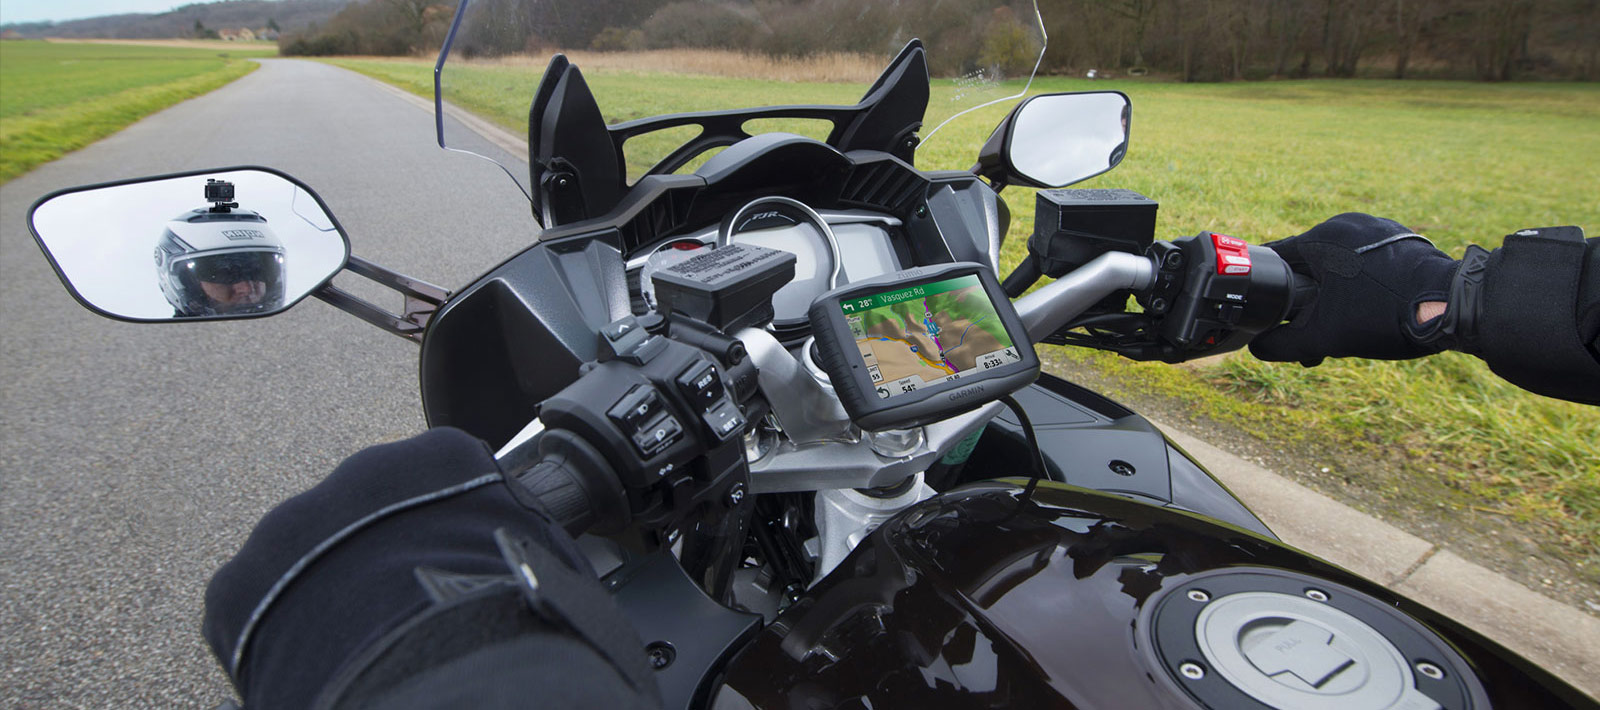 Motorcycle|gps navigator|motorcycle navigation|Handheld gps